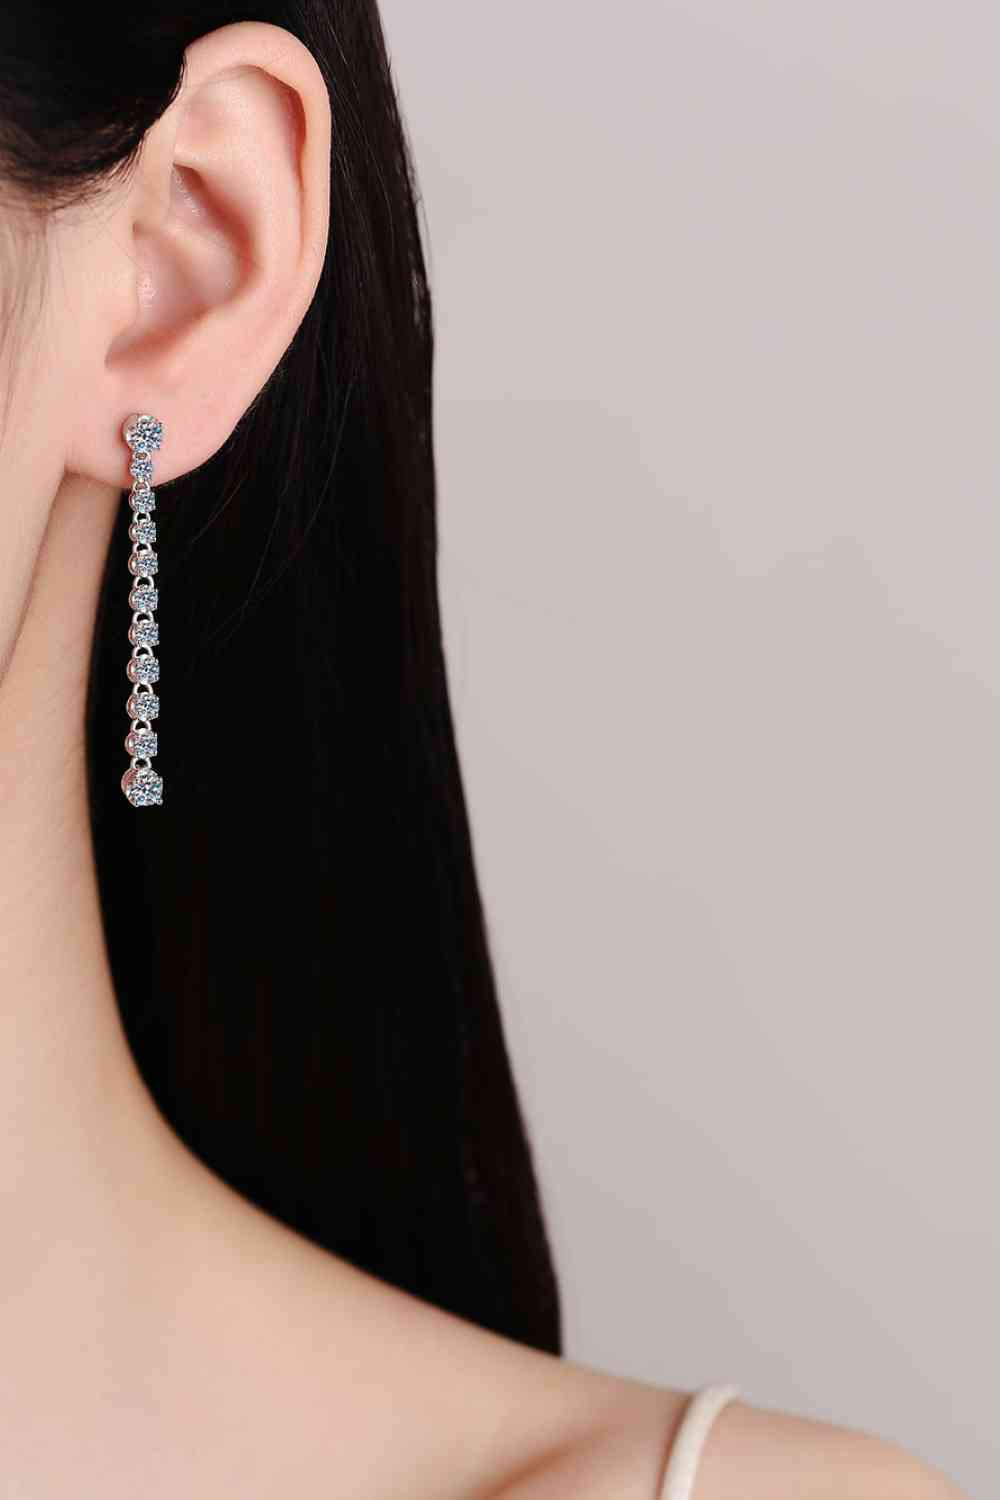 Adored 1.18 Carat Moissanite Long Earrings - BEYOND